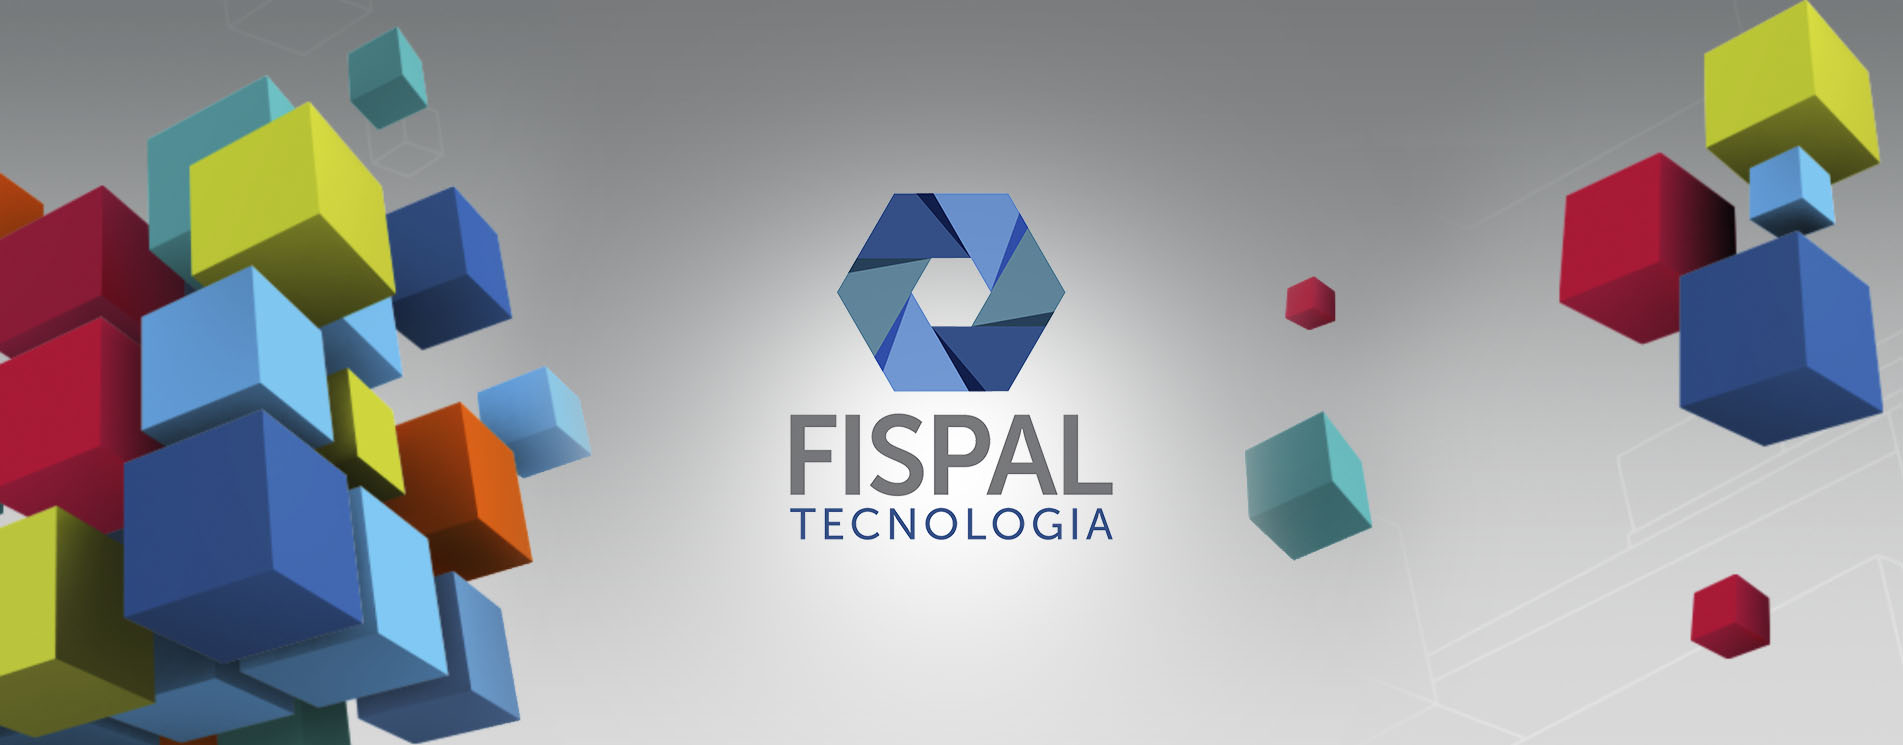 FISPAL Tecnologia